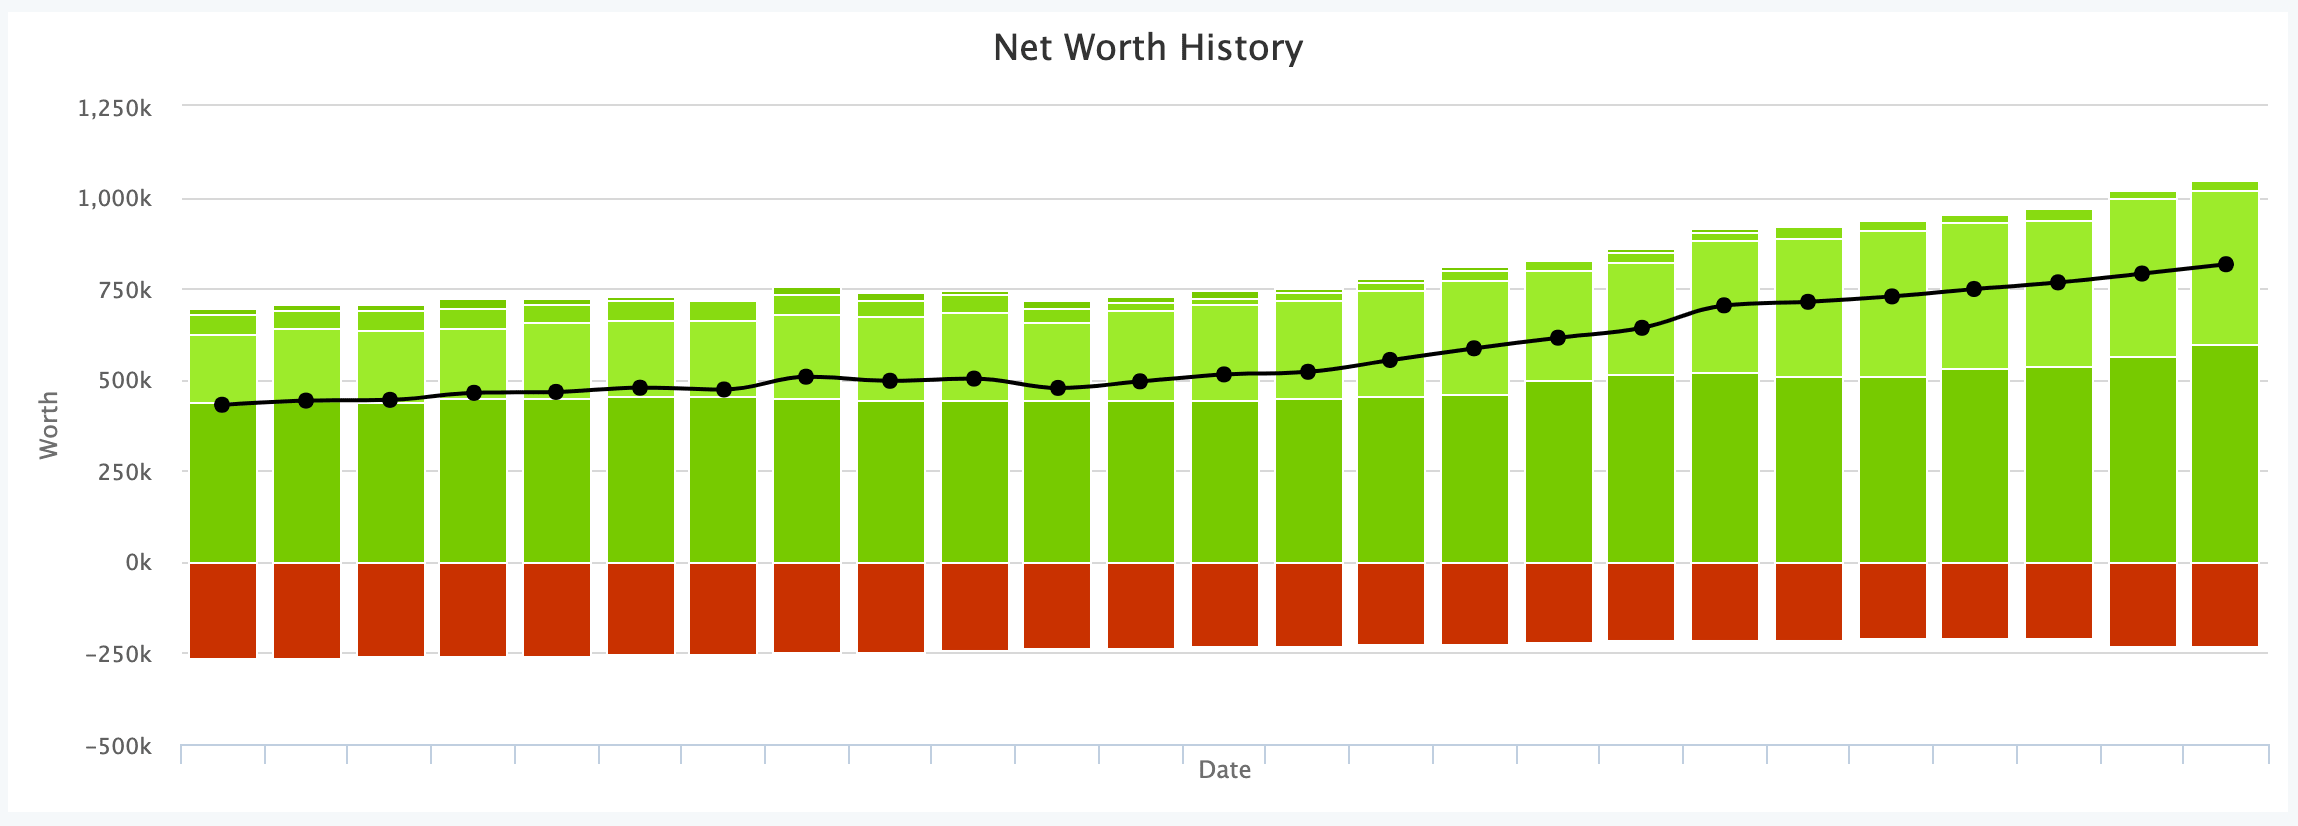 Net Worth Reports